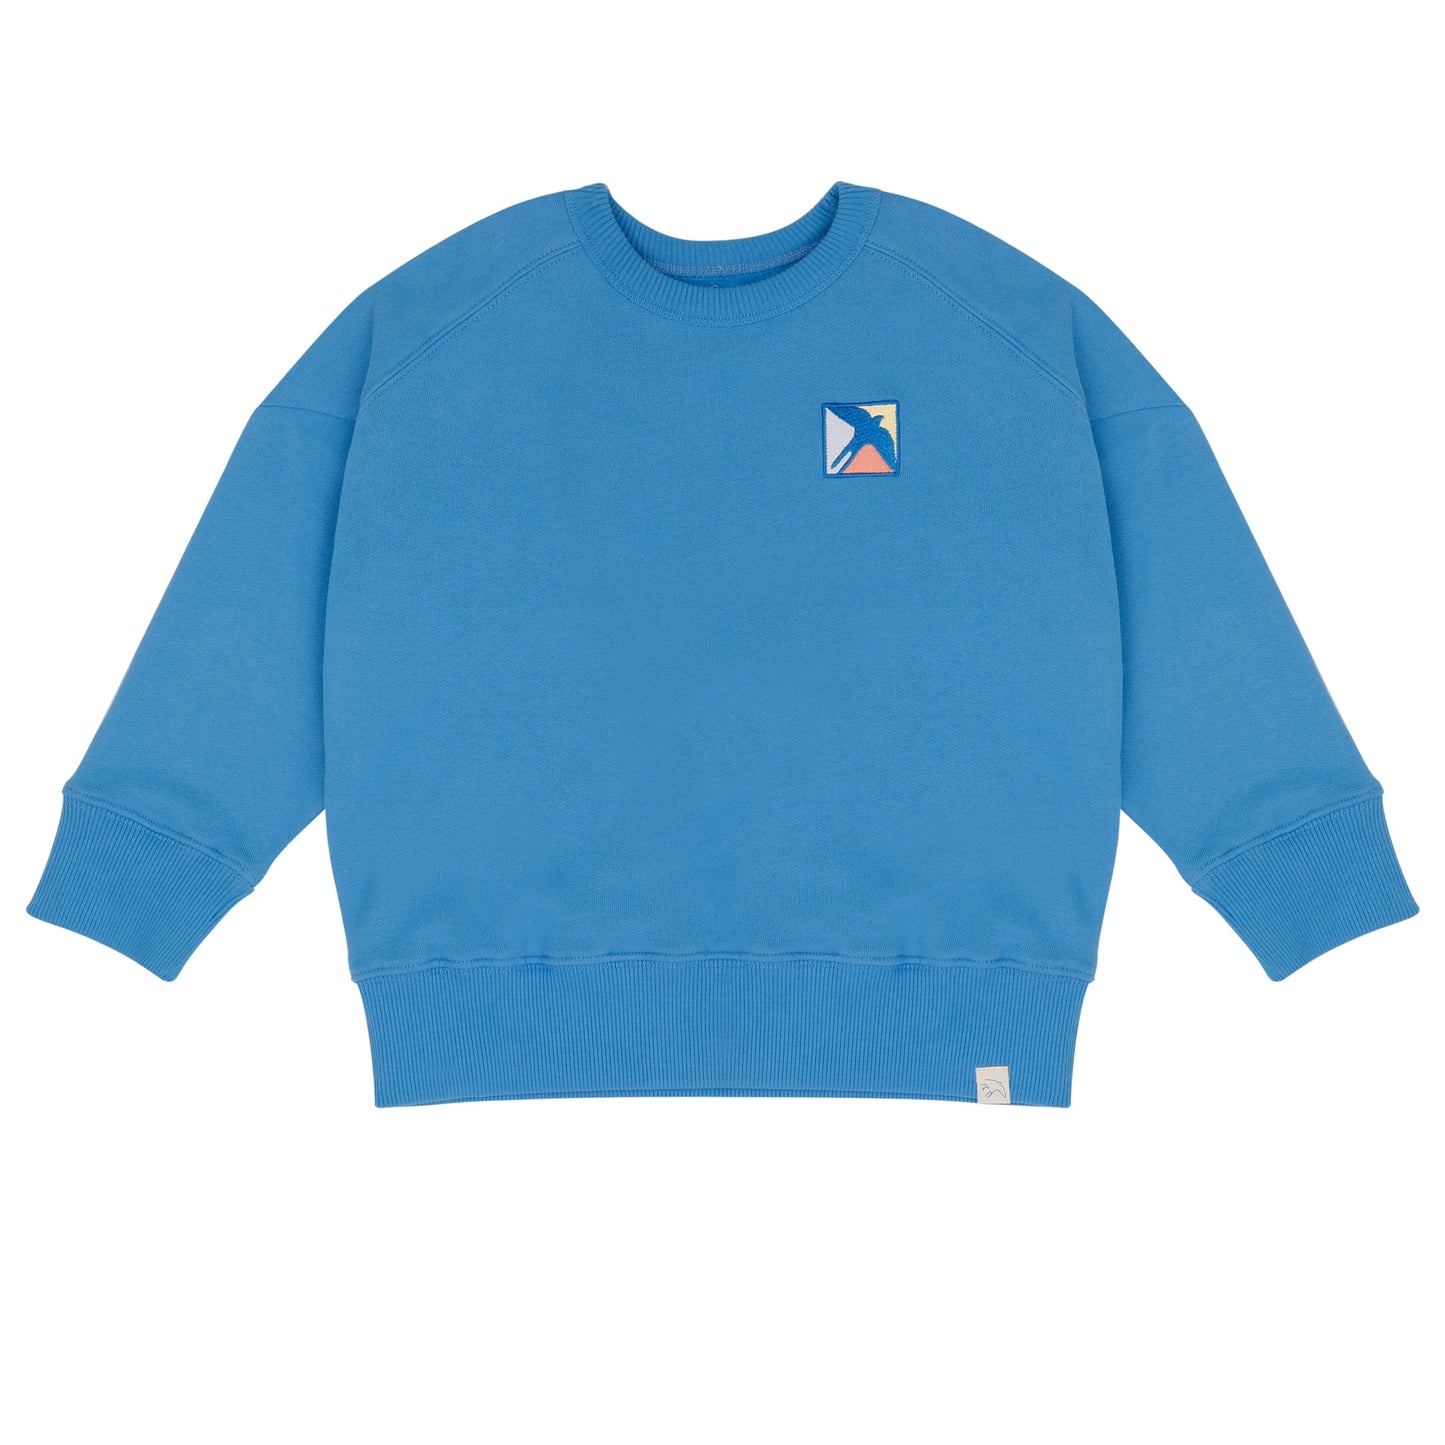 Sammy badge sweater bright blue